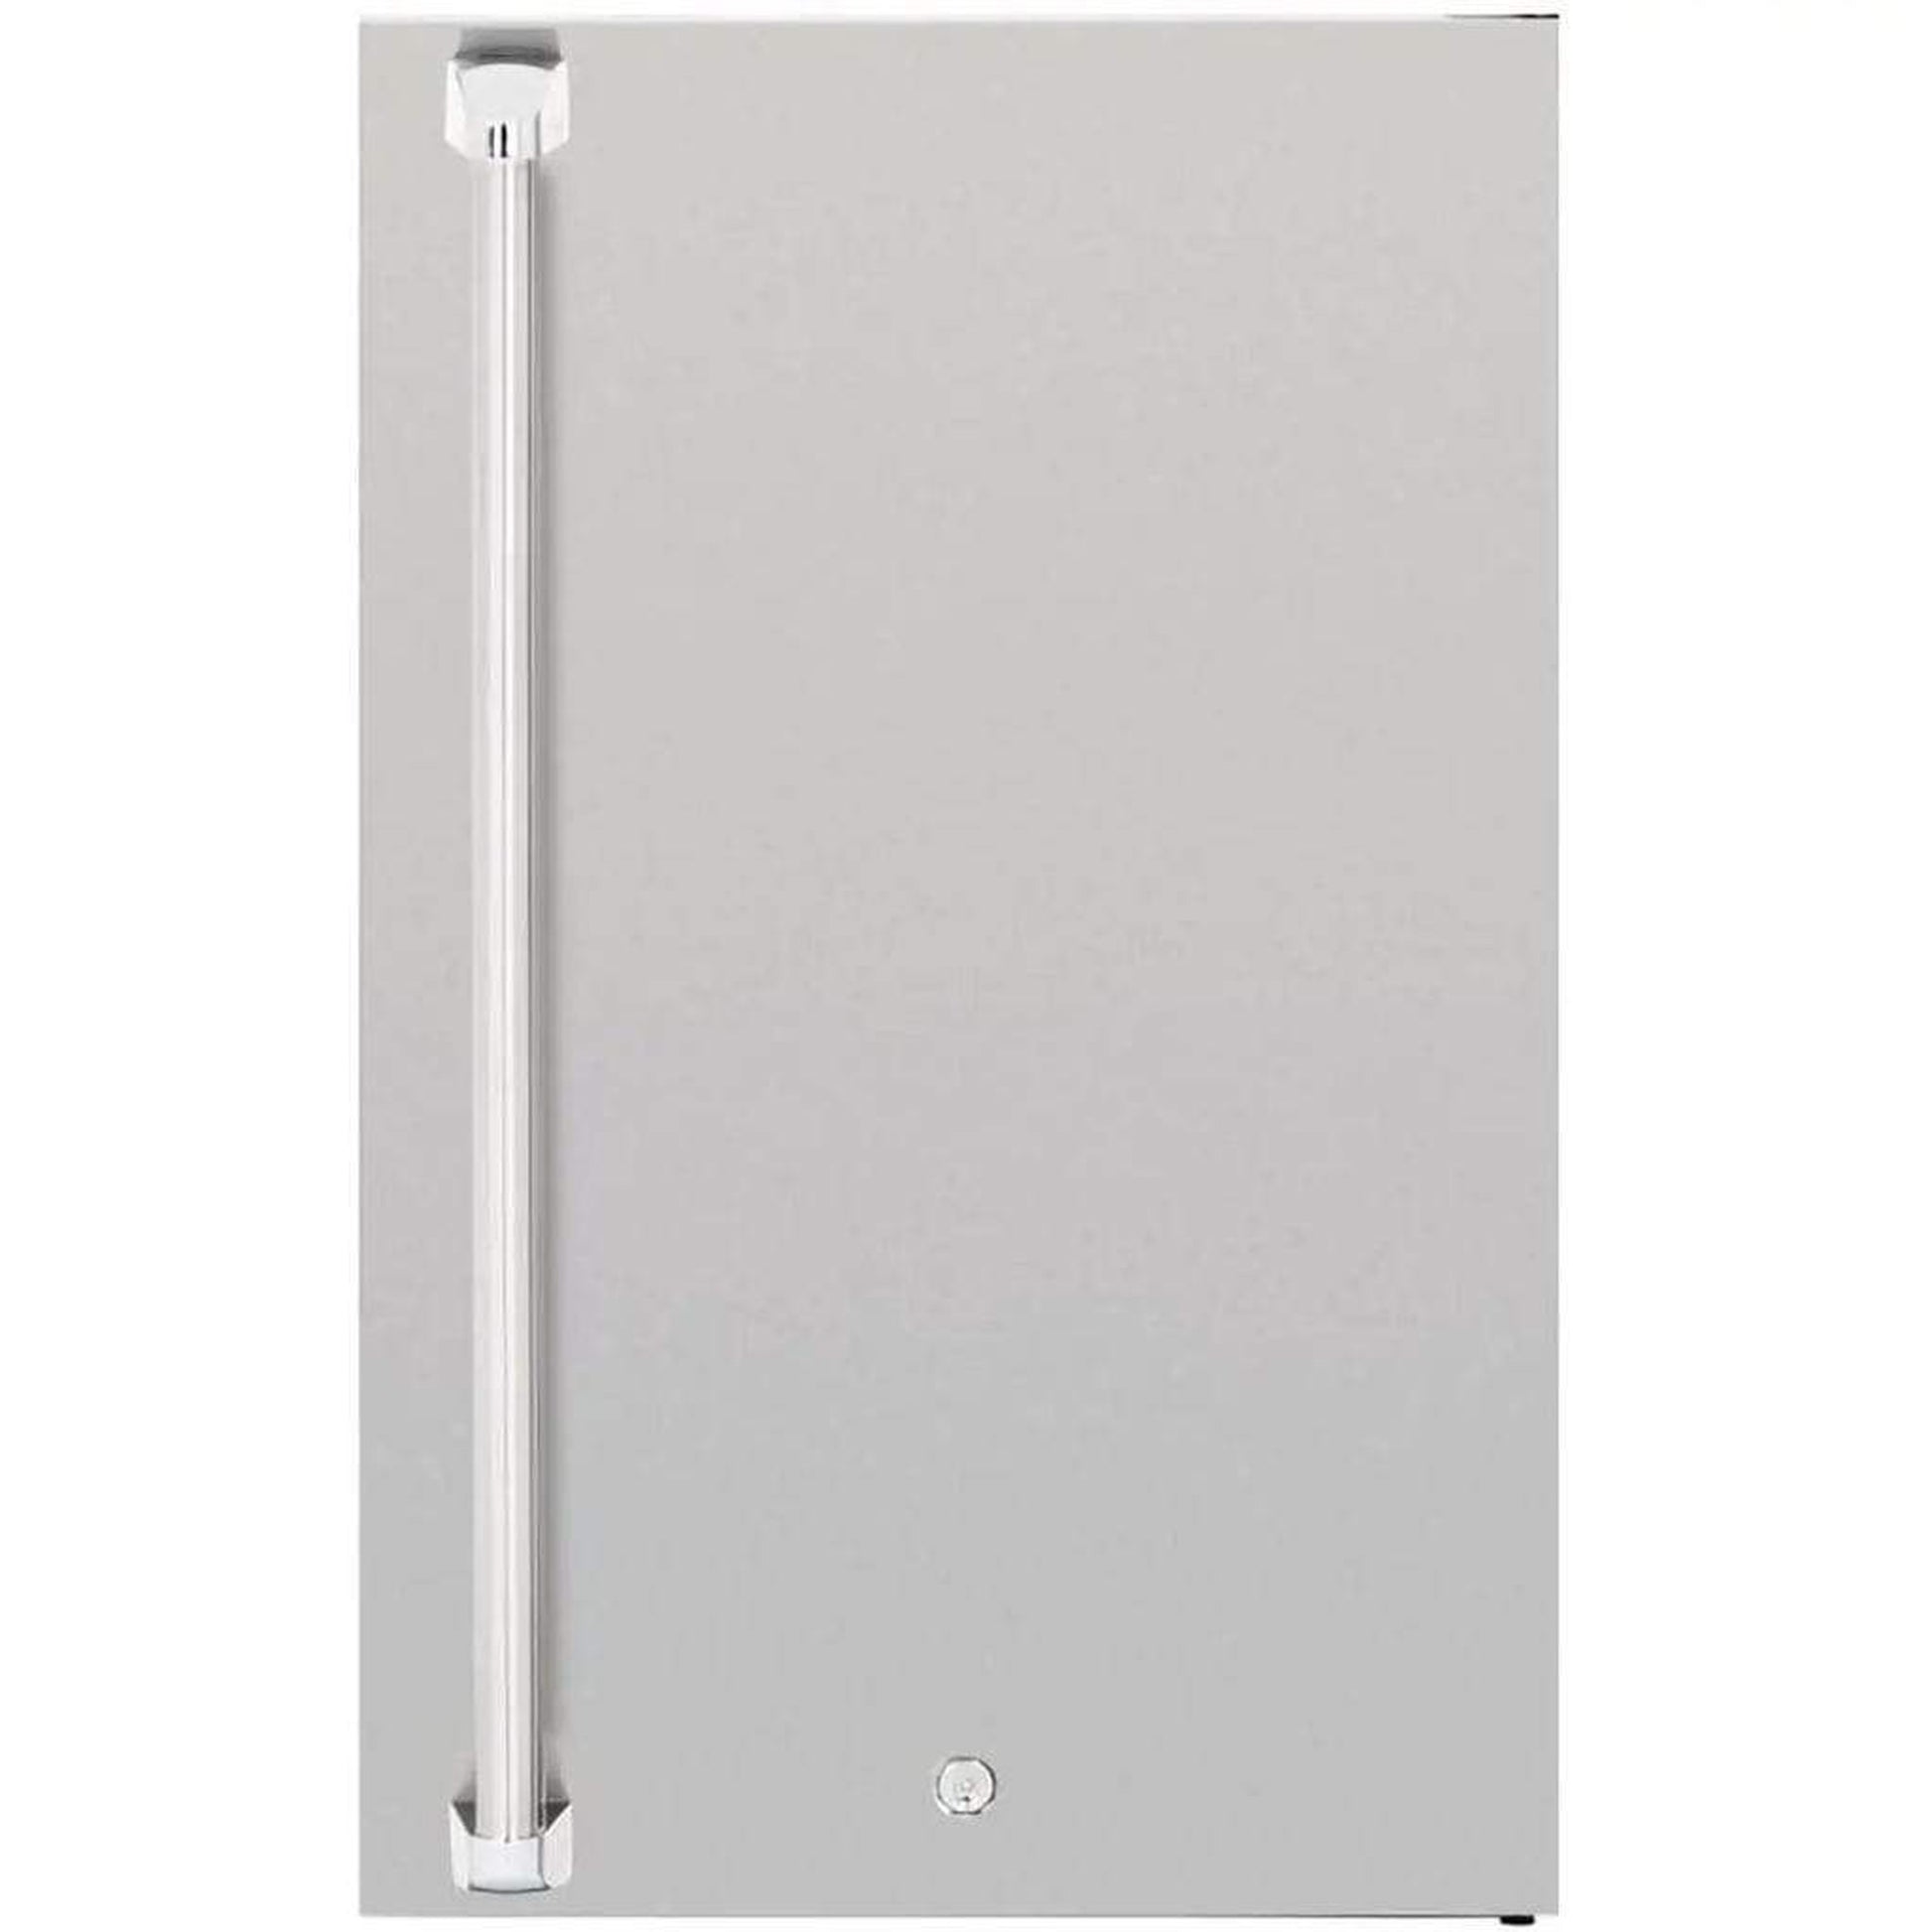 Summerset Left/Right Hinge Door Liner Accessory for SSRFR-21S 4.5 Cu. Ft. Refrigerator